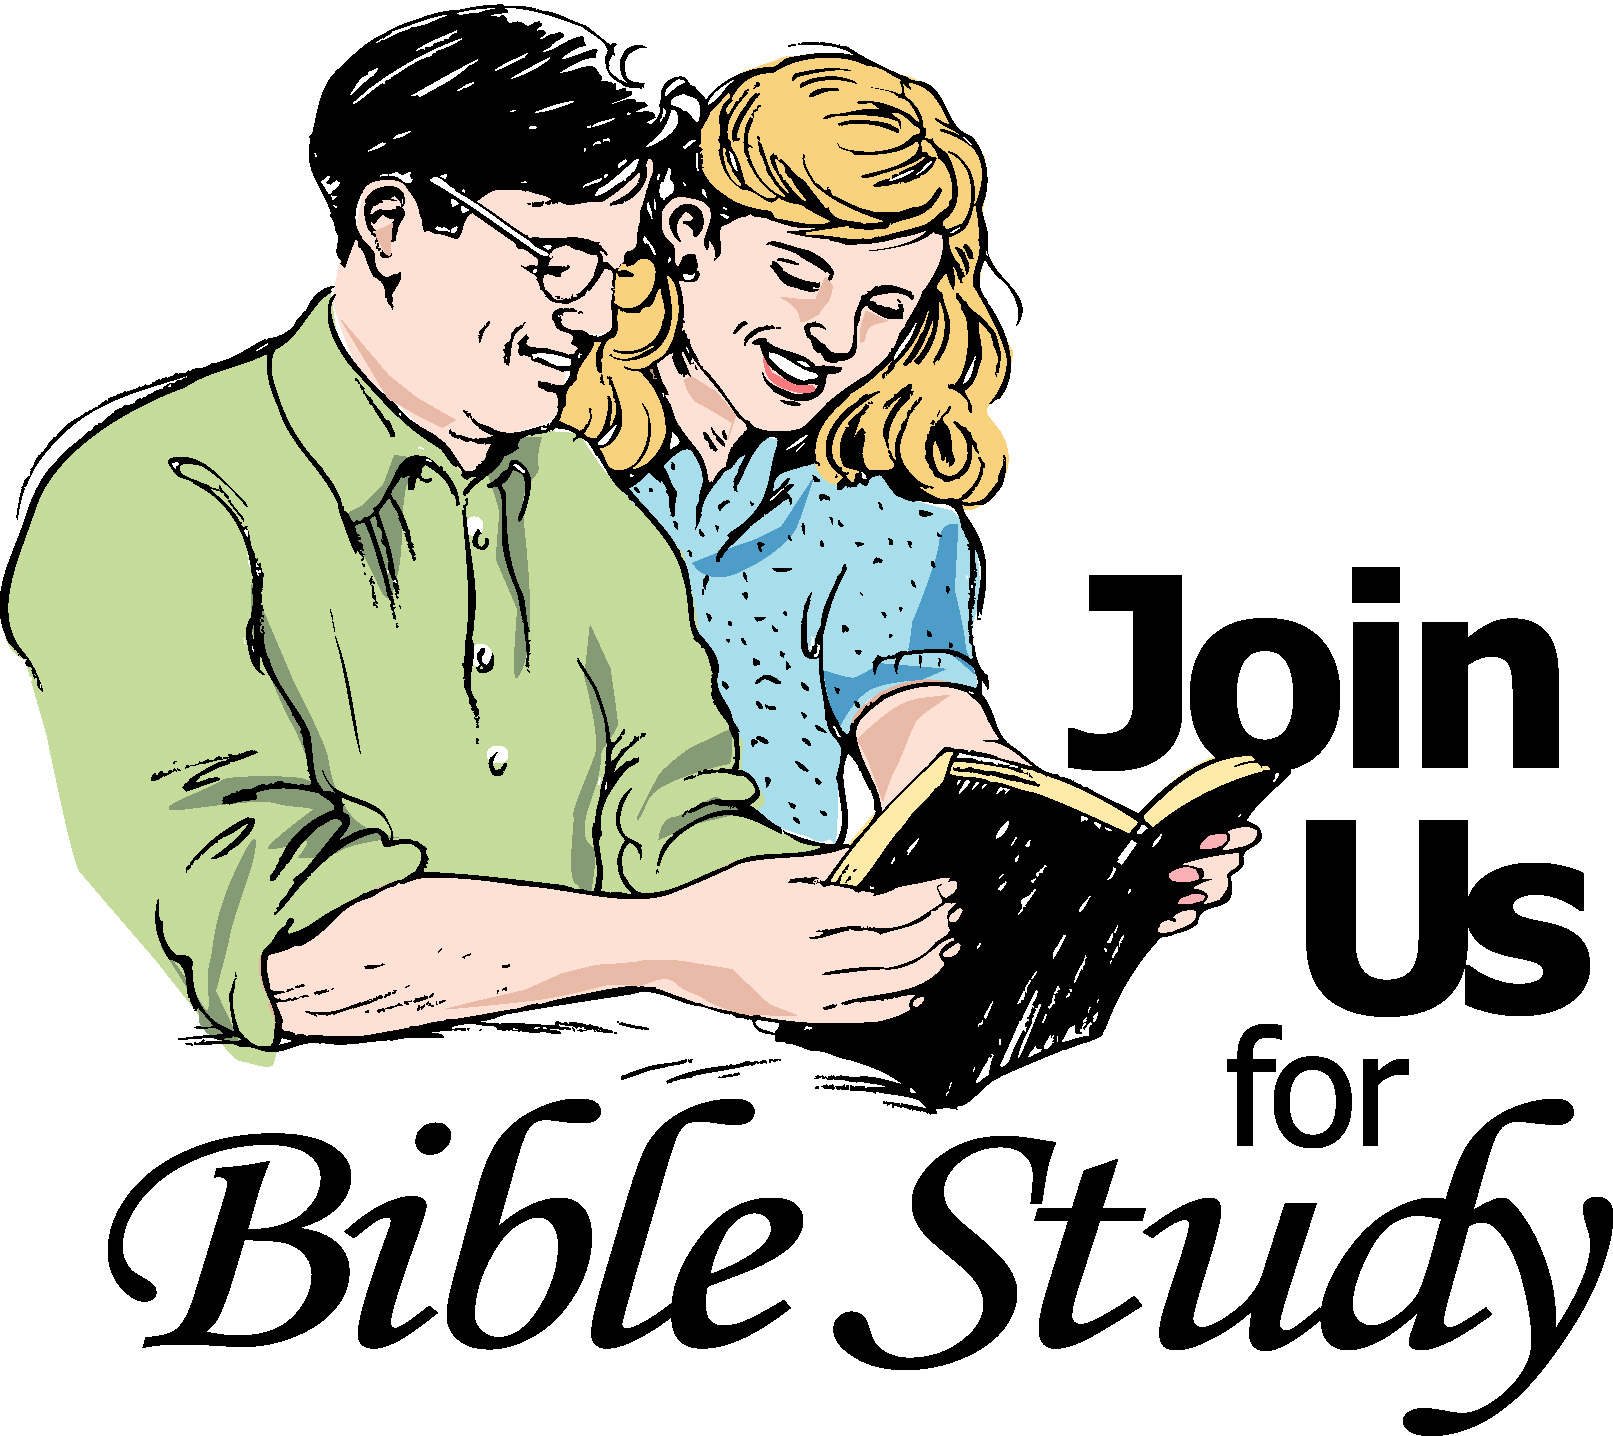 online bible study classes